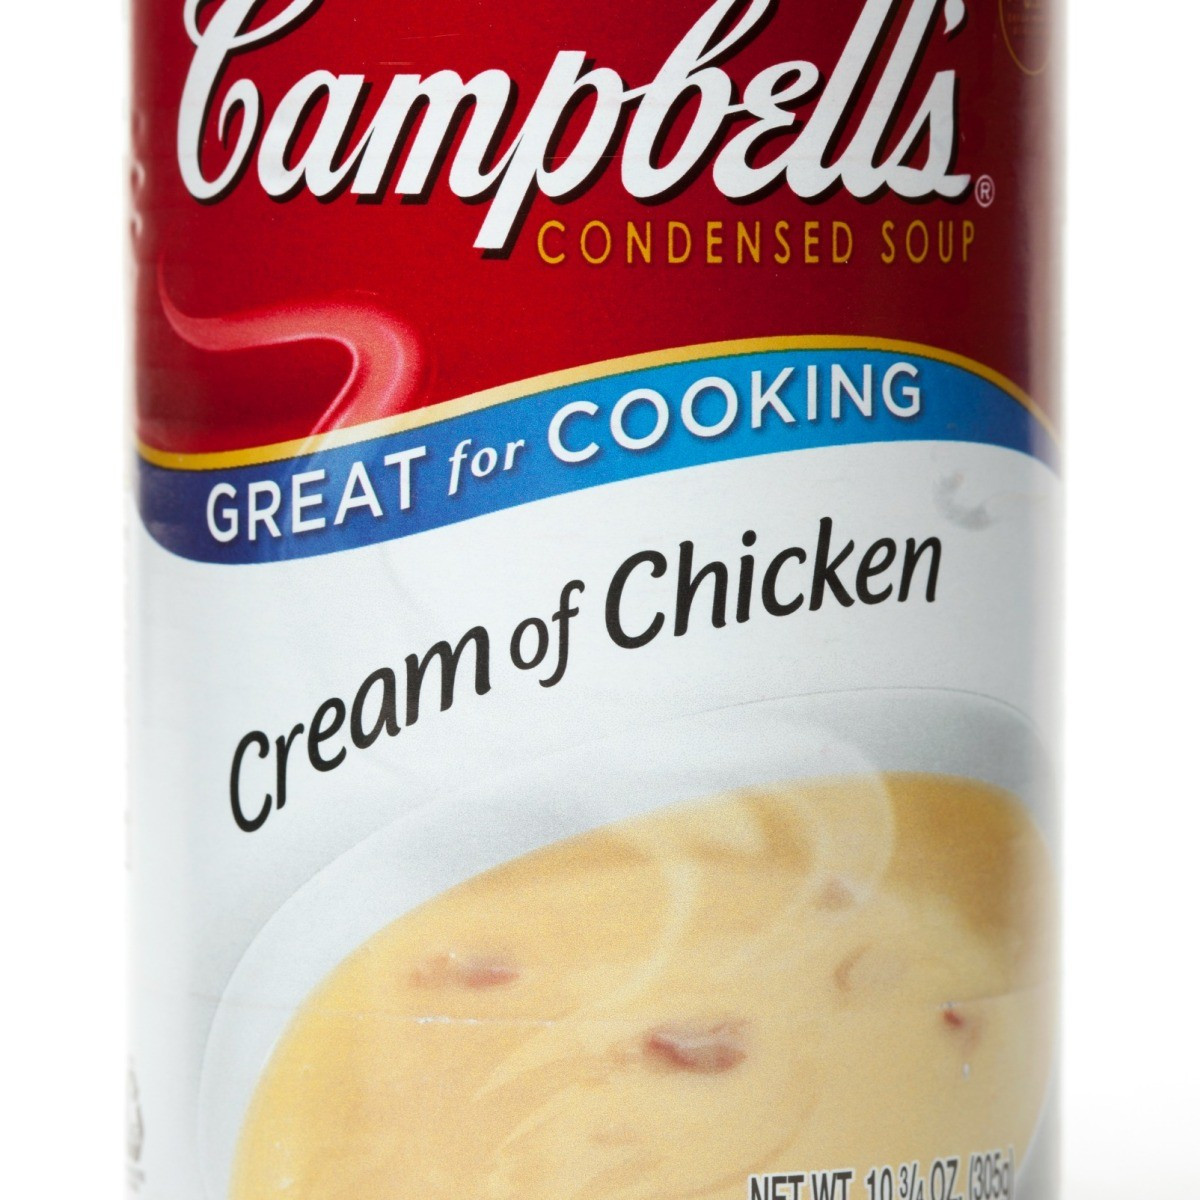 Easy Giblet Gravy Recipe With Cream Of Chicken Soup
 Making Cream of Chicken Soup Gravy